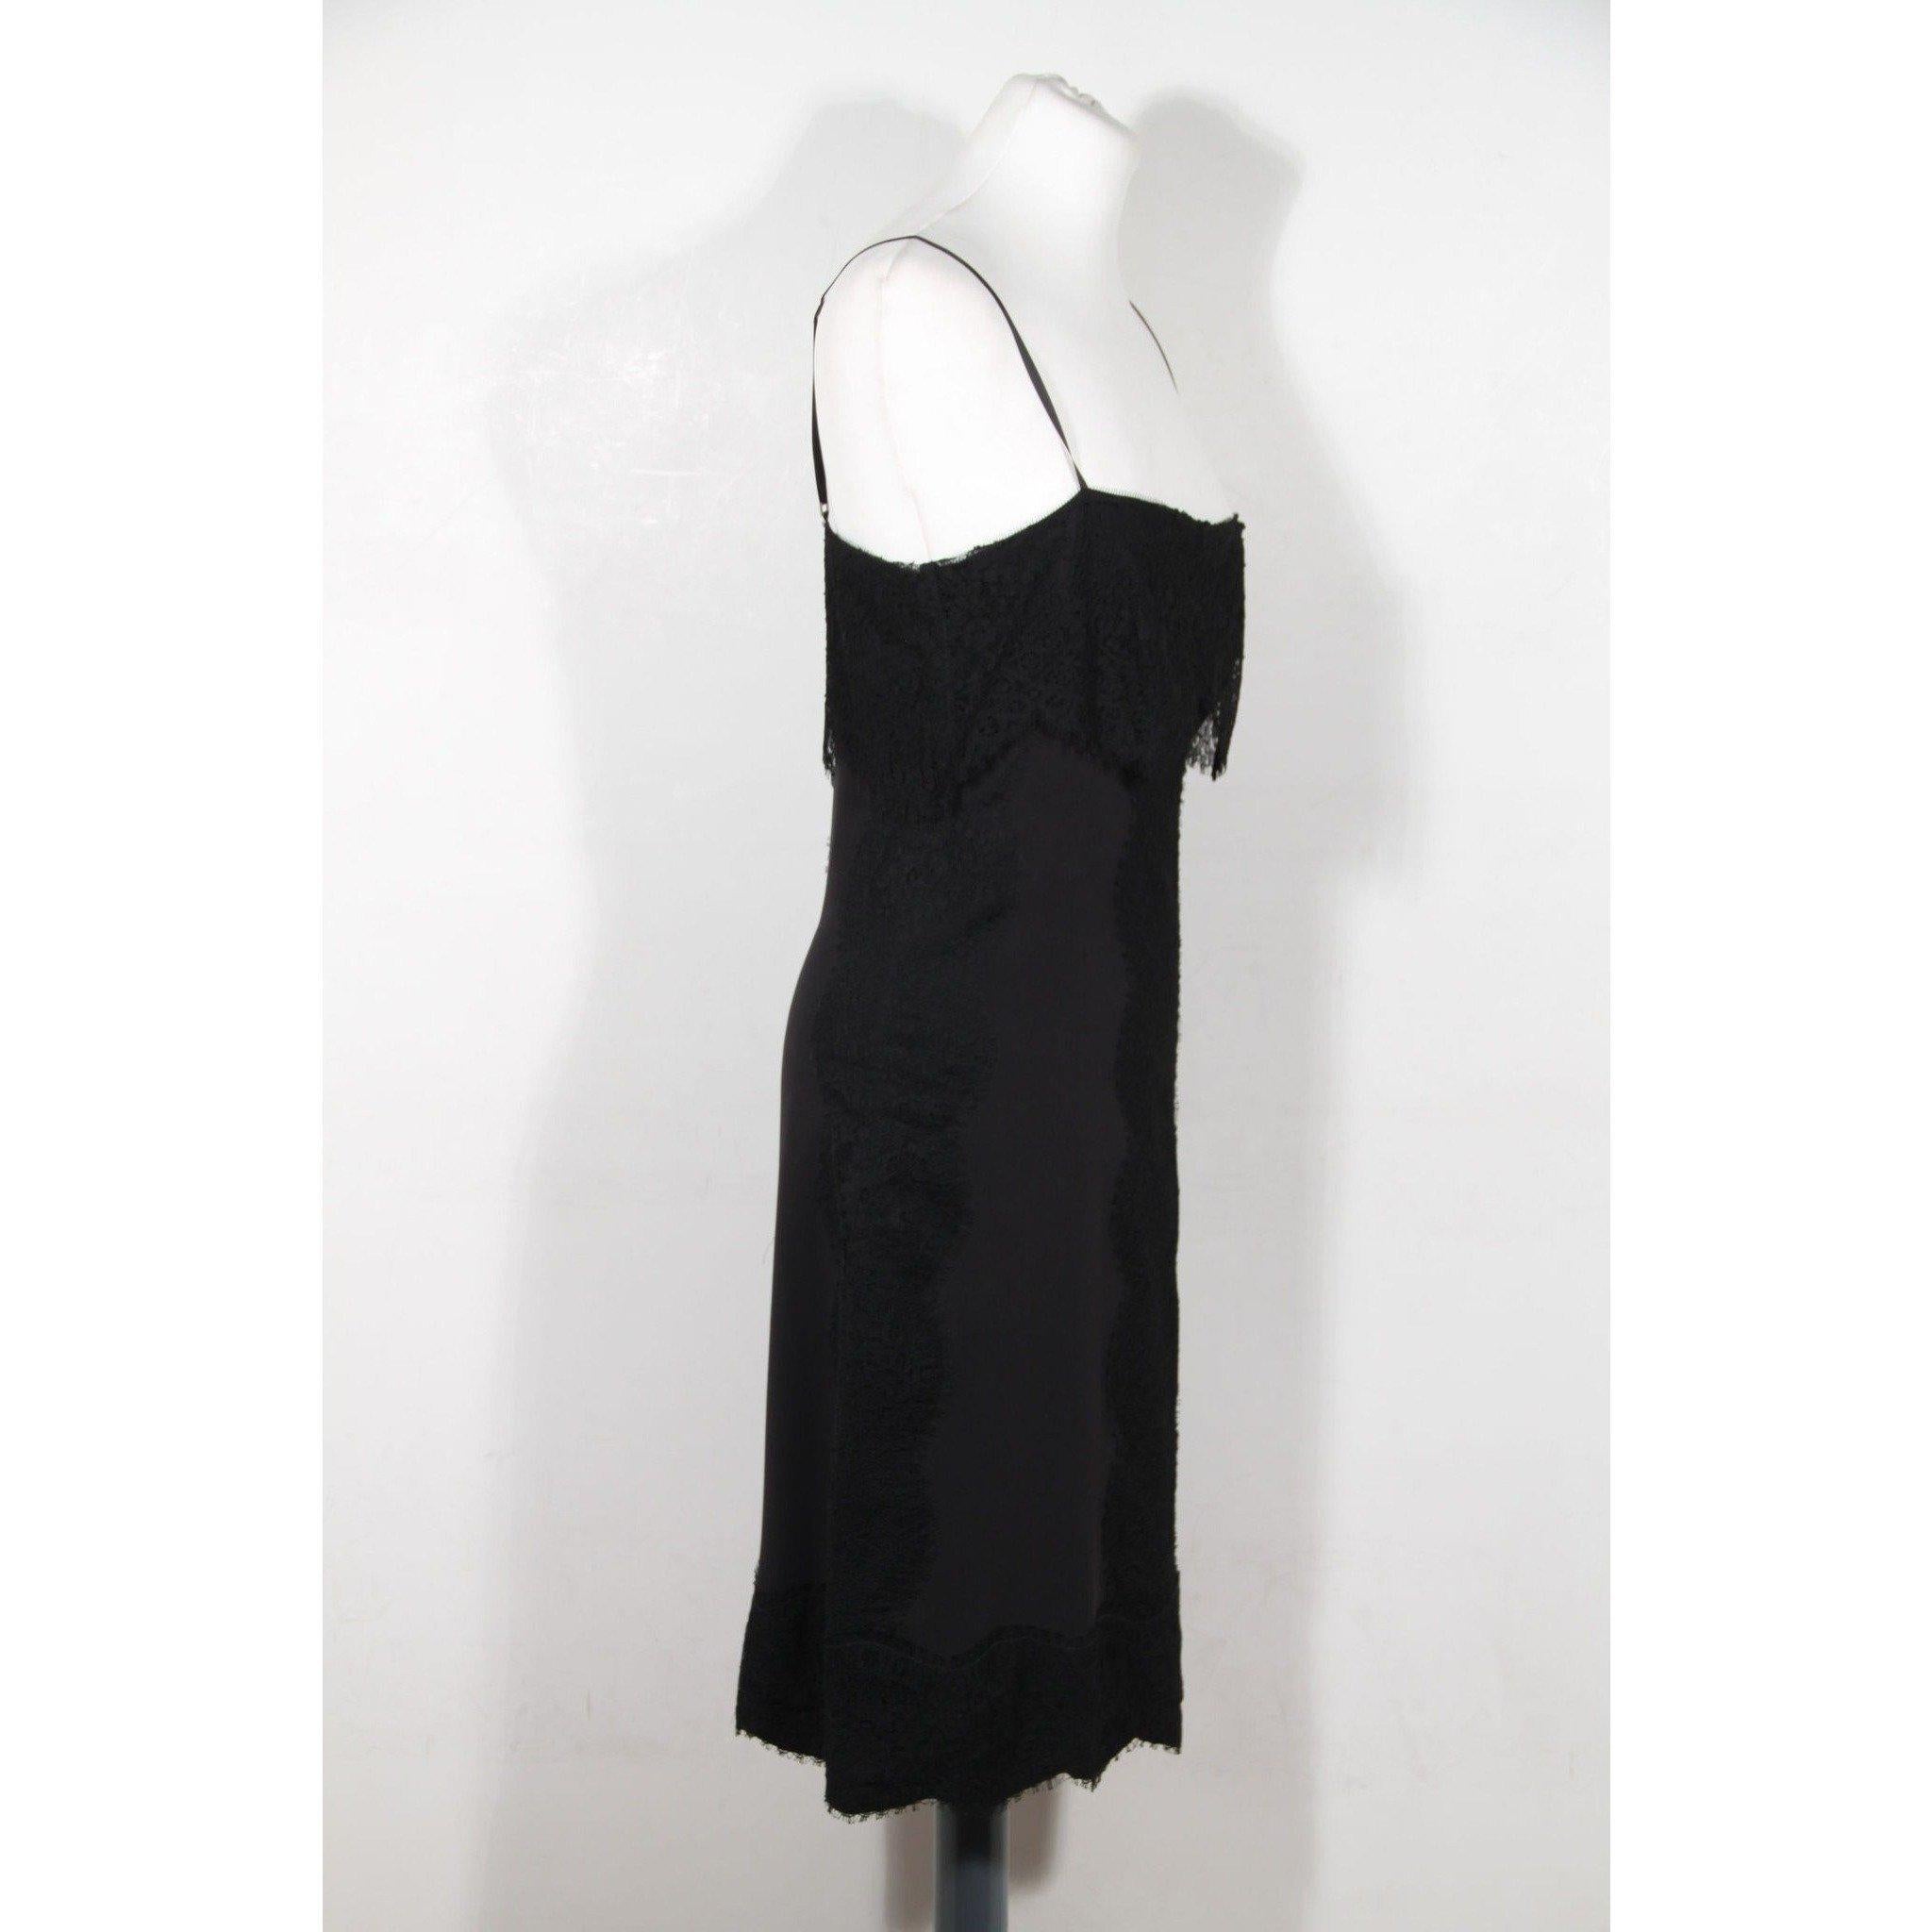 - Gucci Black Silk Cami Llttle Black Dress with Lace Trim Size 42
- Lace trim
- Scallopped hem
- Adjustable straps
- Fabric / Material: 90% Silk, 6% Nylon, 4% Viscose
- Color / Effect: Black
- Main Closure: Side zip closure
- Internal lining (color,